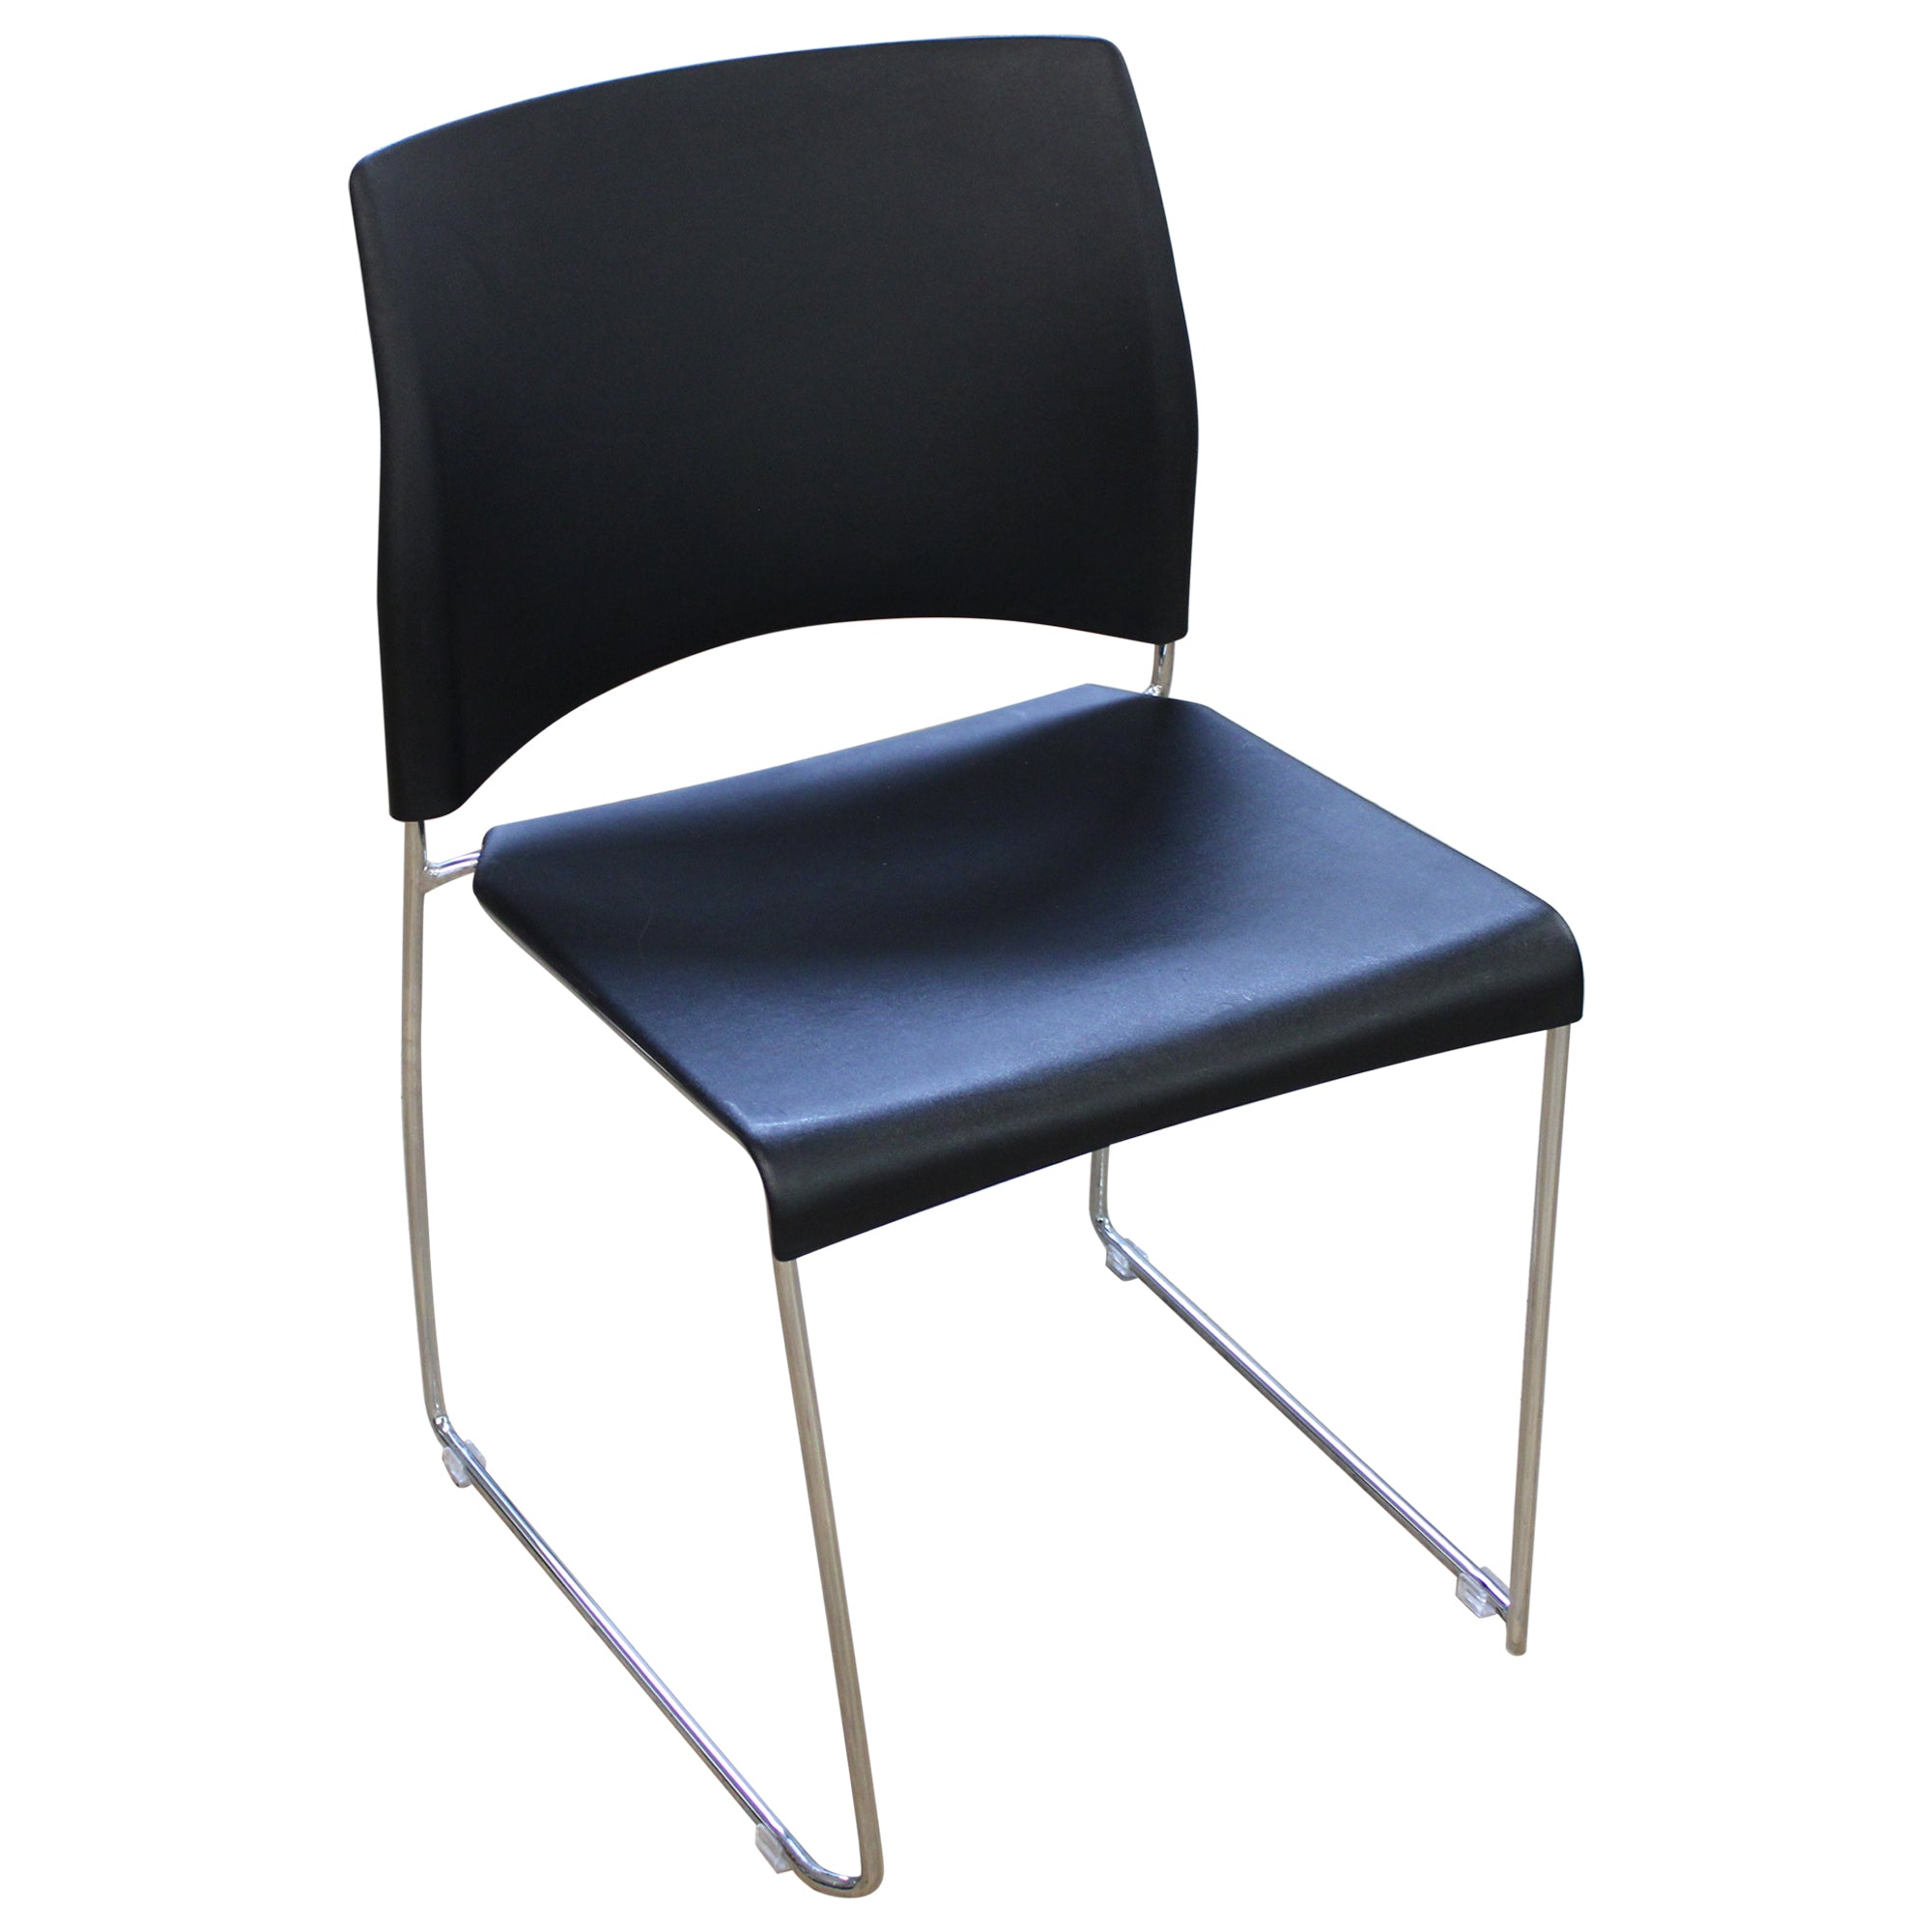 Allsteel Nimble Chair - Black - Preowned